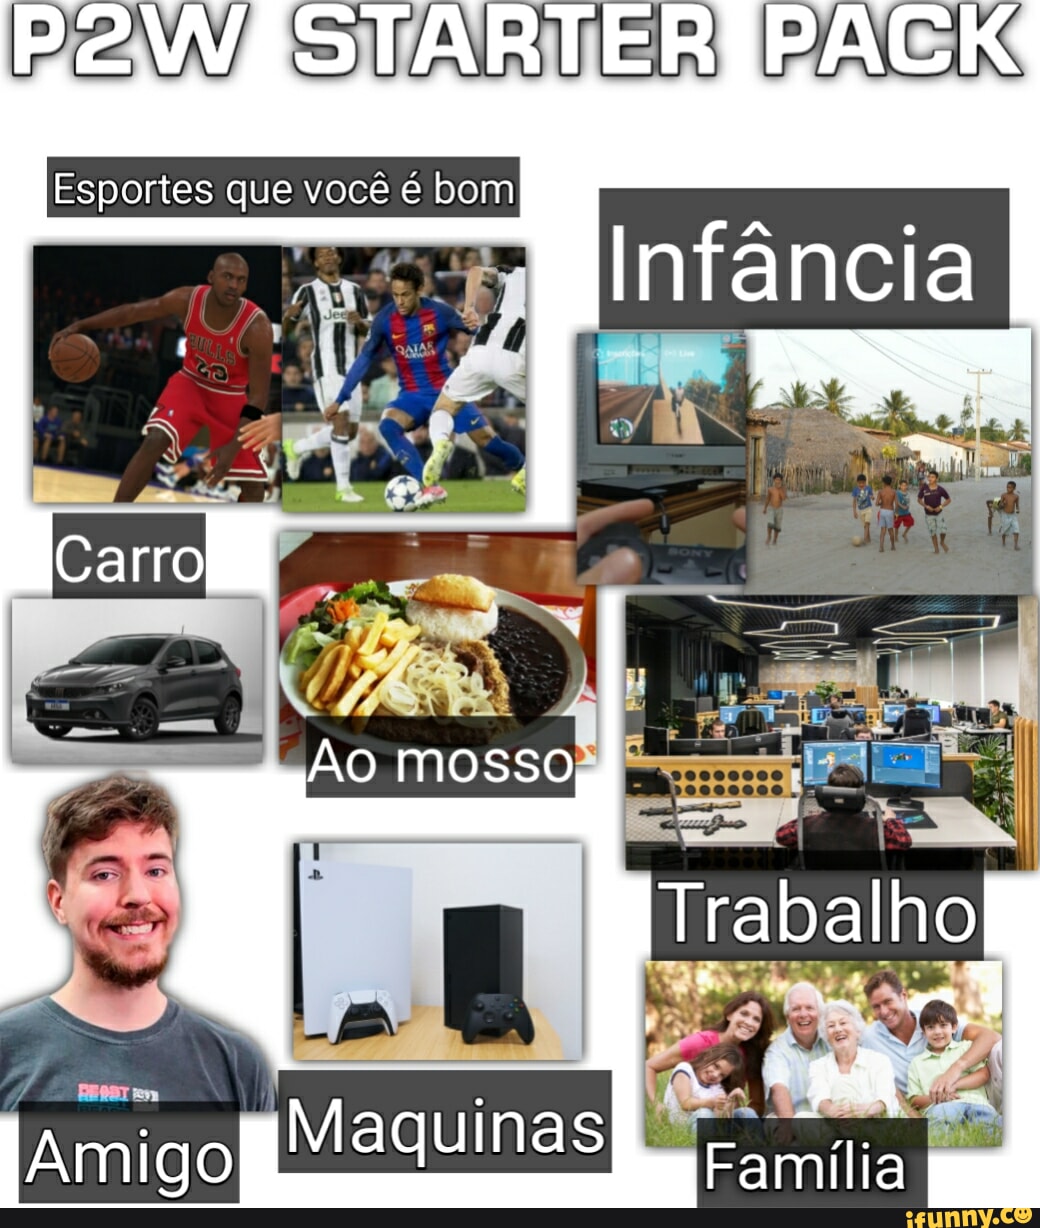 Jogos e suas conunidades: AD fino seniores - iFunny Brazil